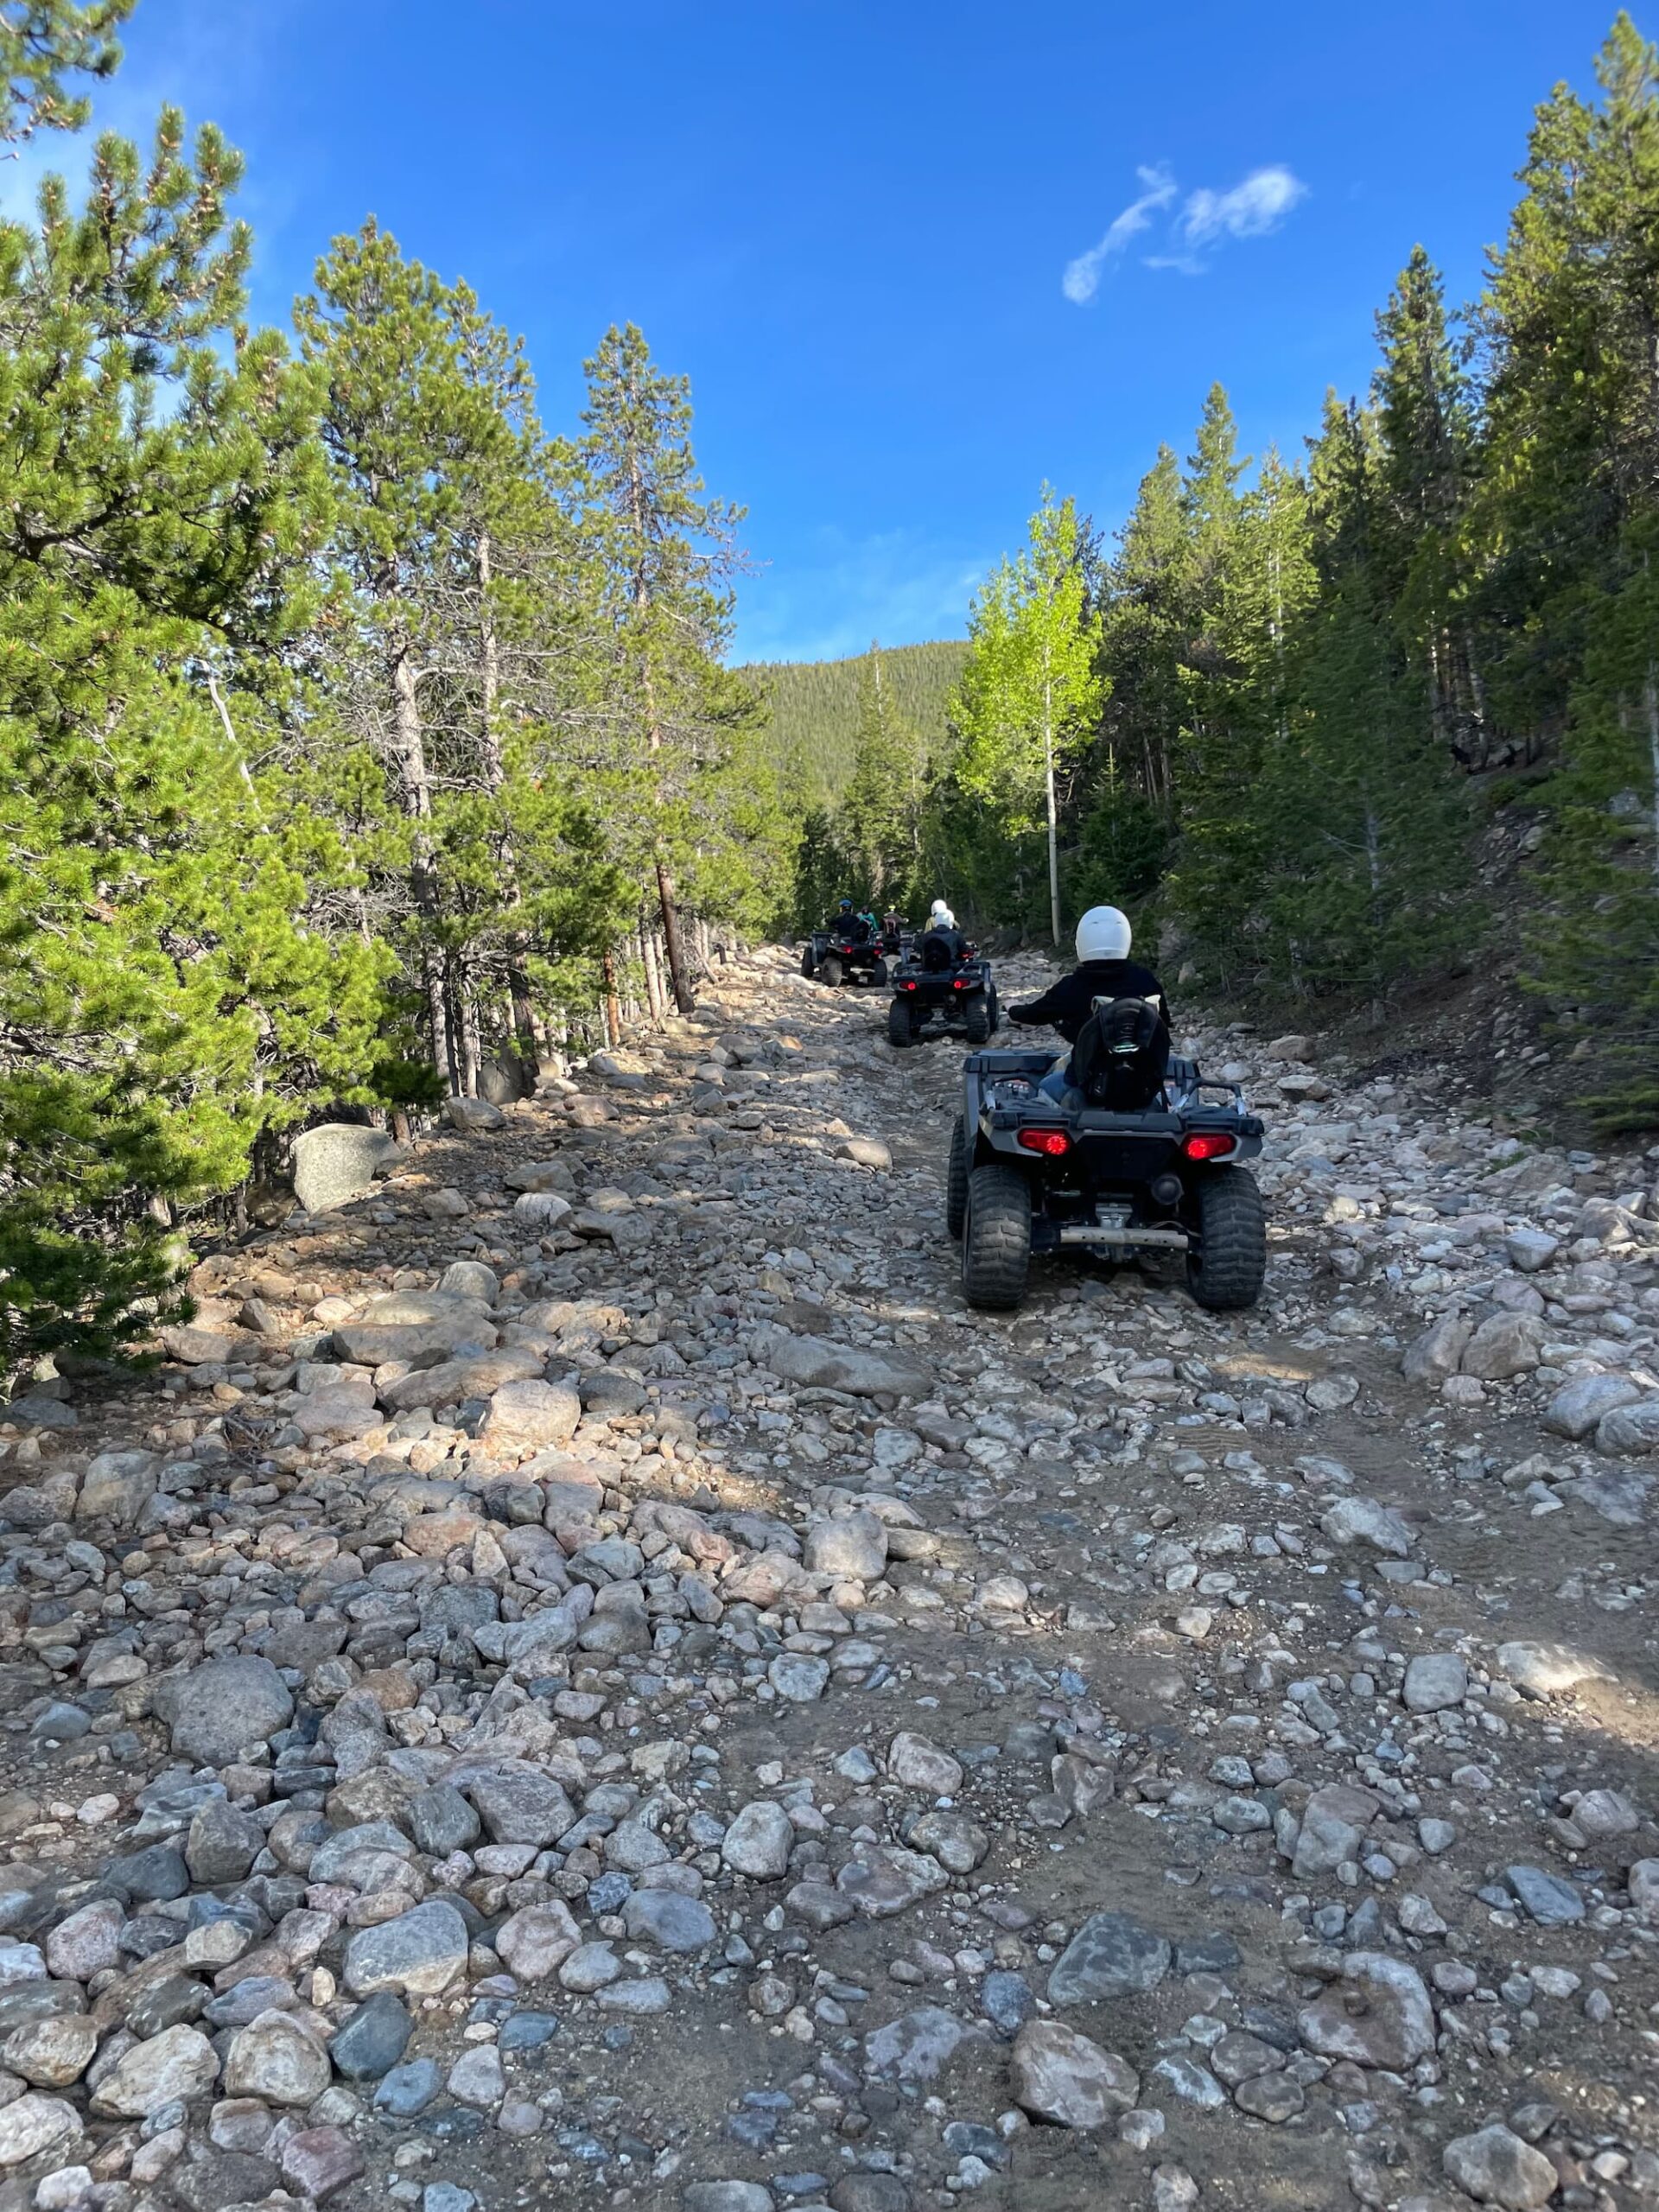 ATV's on a rocks road between trees